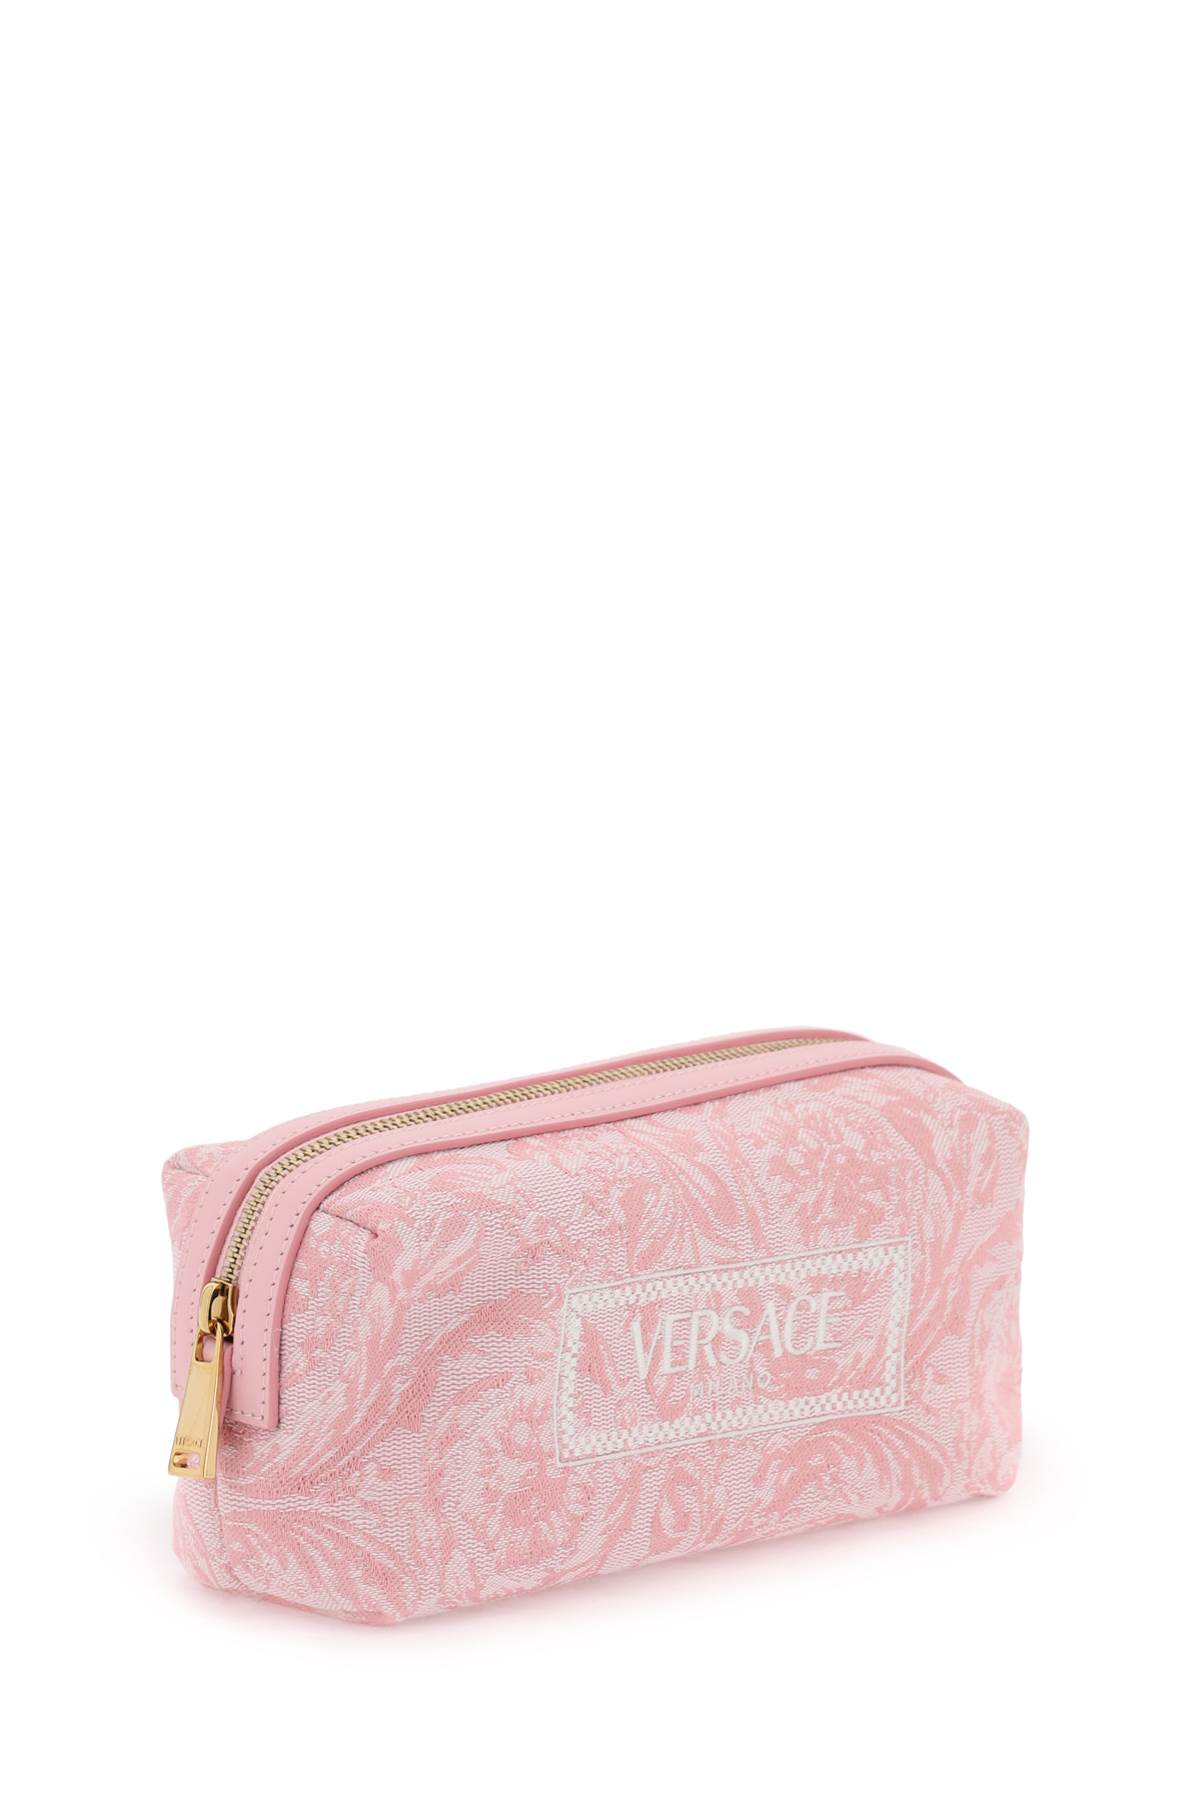 Shop Versace Barocco Vanity Case In Pale Pink English Rose Ve (pink)